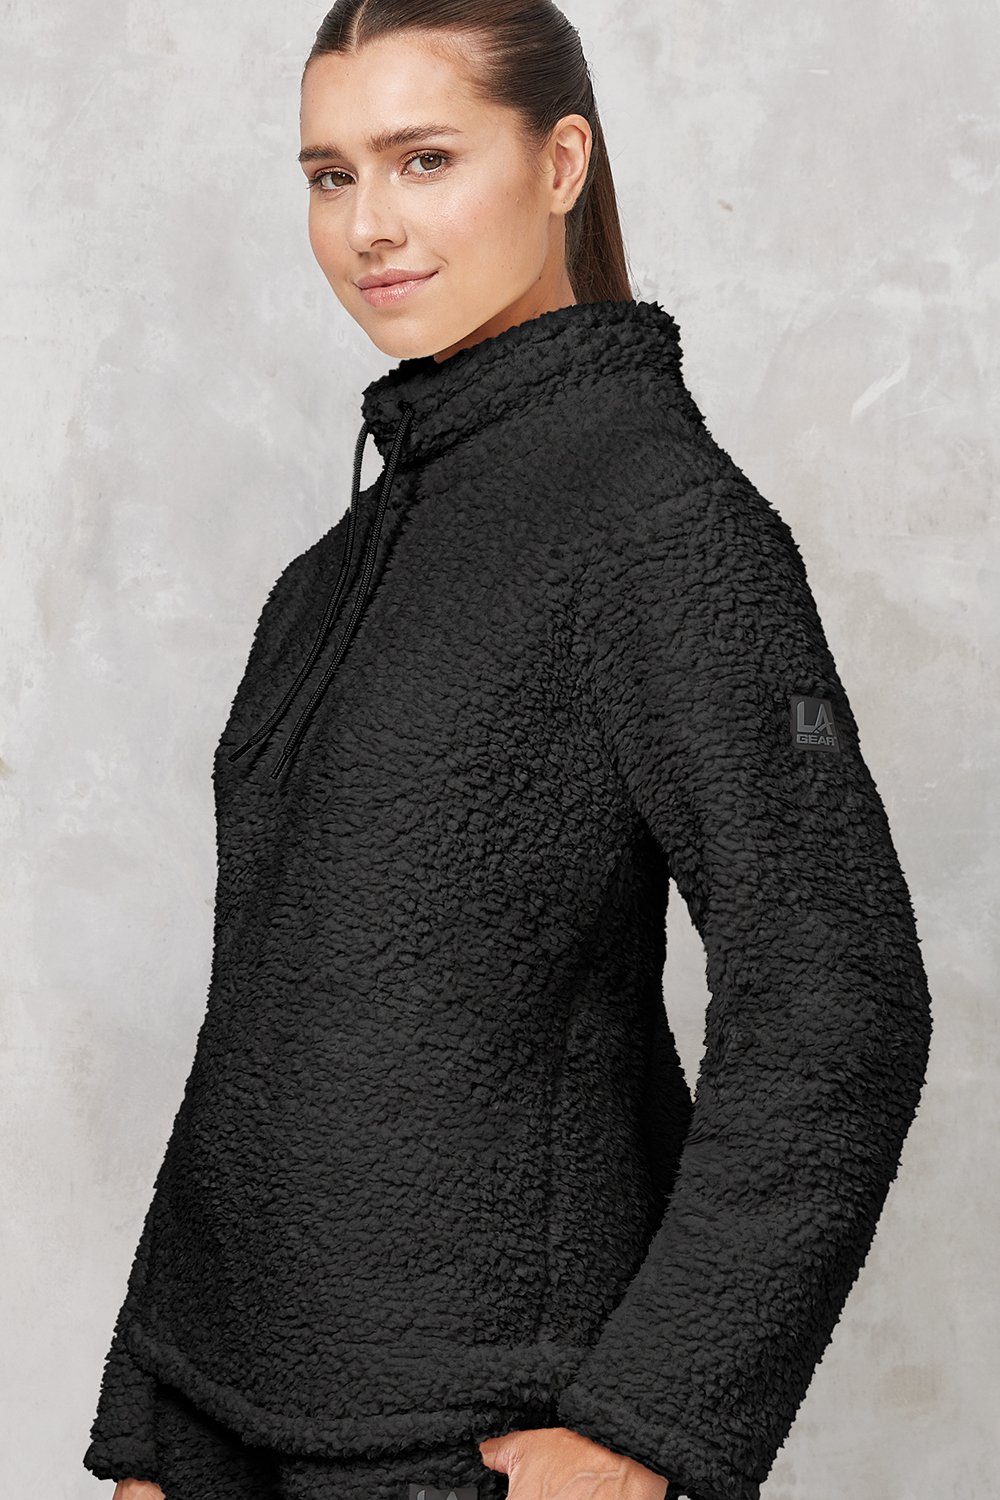 La Gear Sweatshirt Pullover, Teddyfleece 29459 anthracit